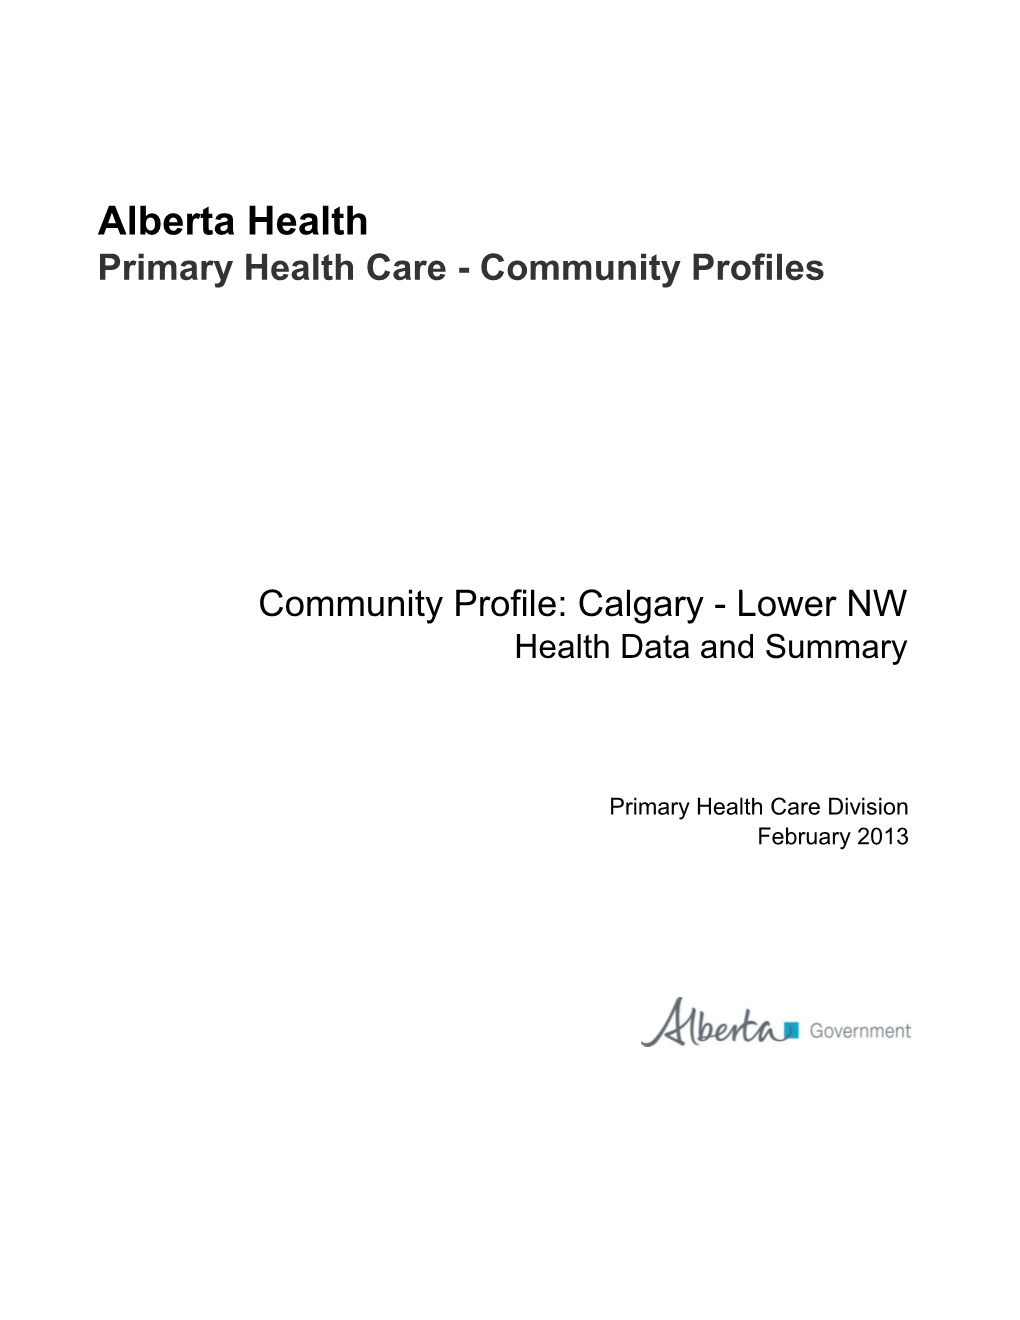 Calgary - Lower NW Health Data and Summary